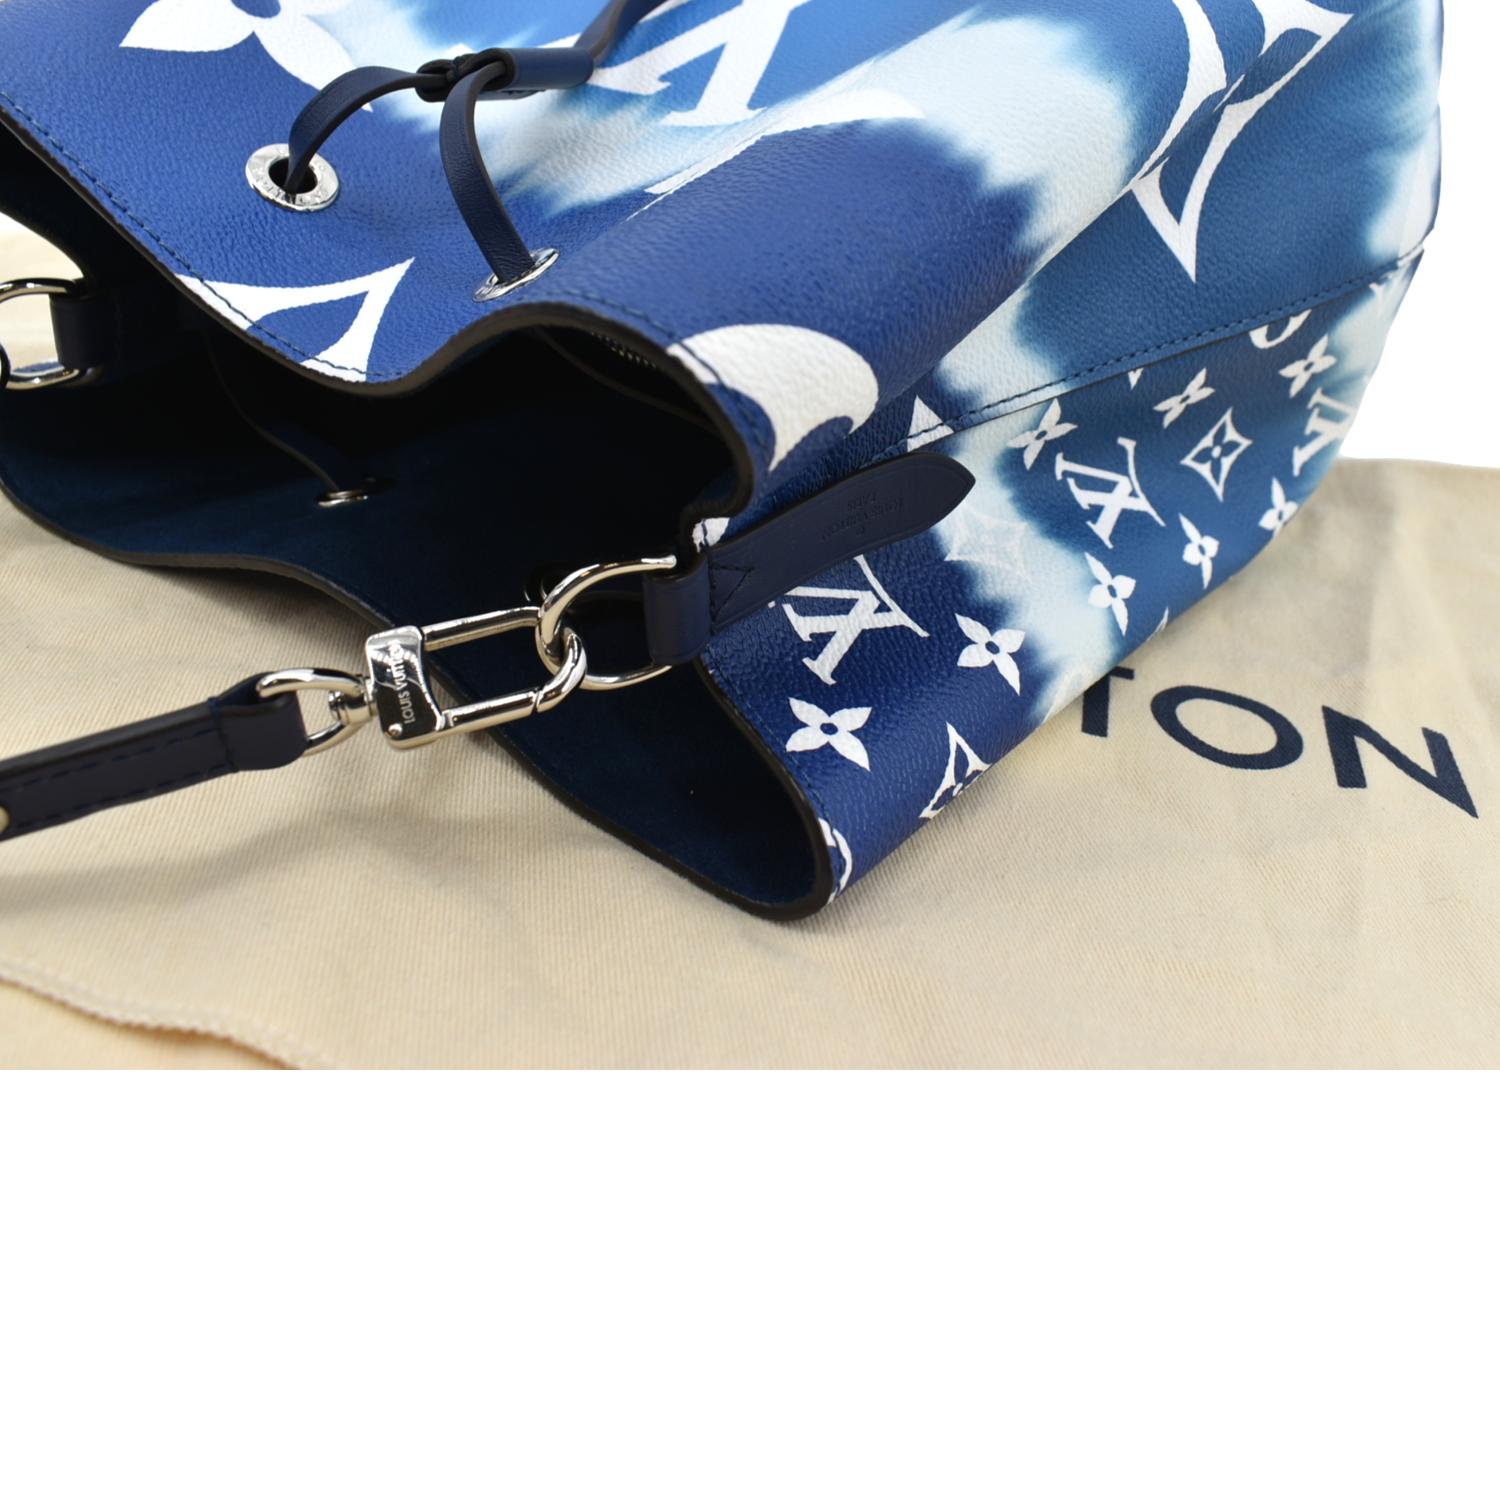 Louis Vuitton Neonoe Handbag Limited Edition Escale Monogram Giant Mm